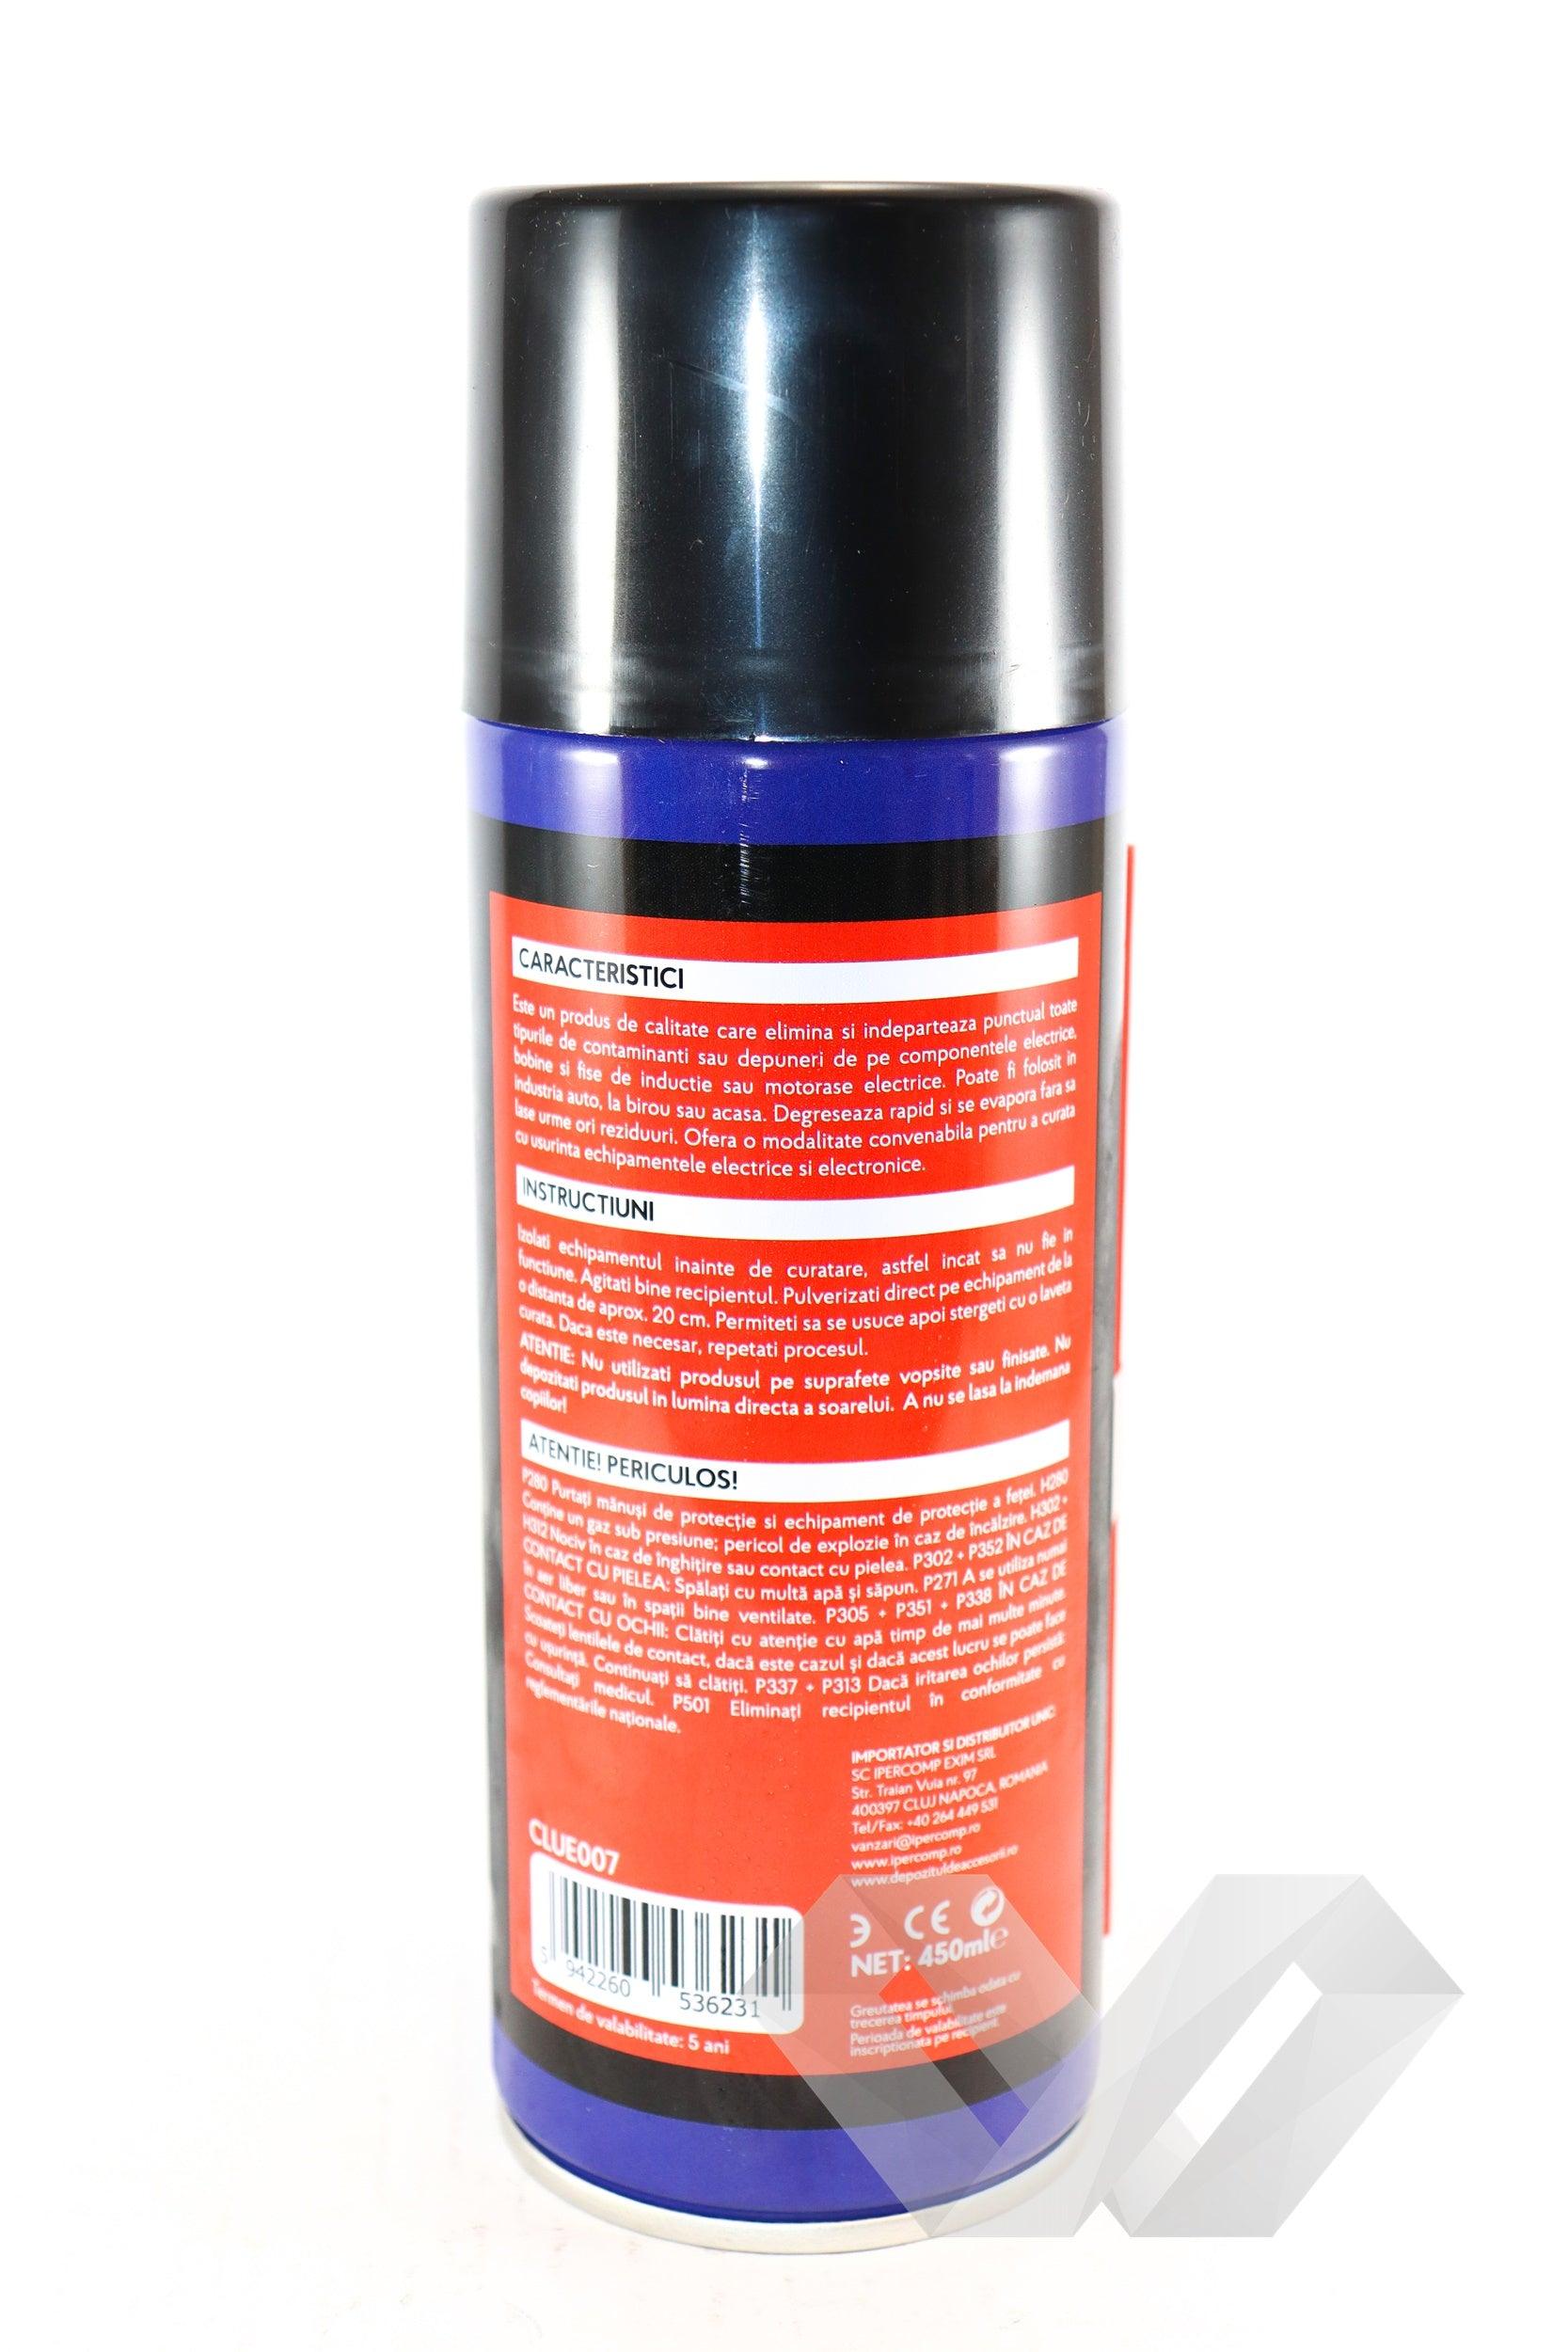 Spray curatat contacte electrice Clue, 450ml - EWO Market